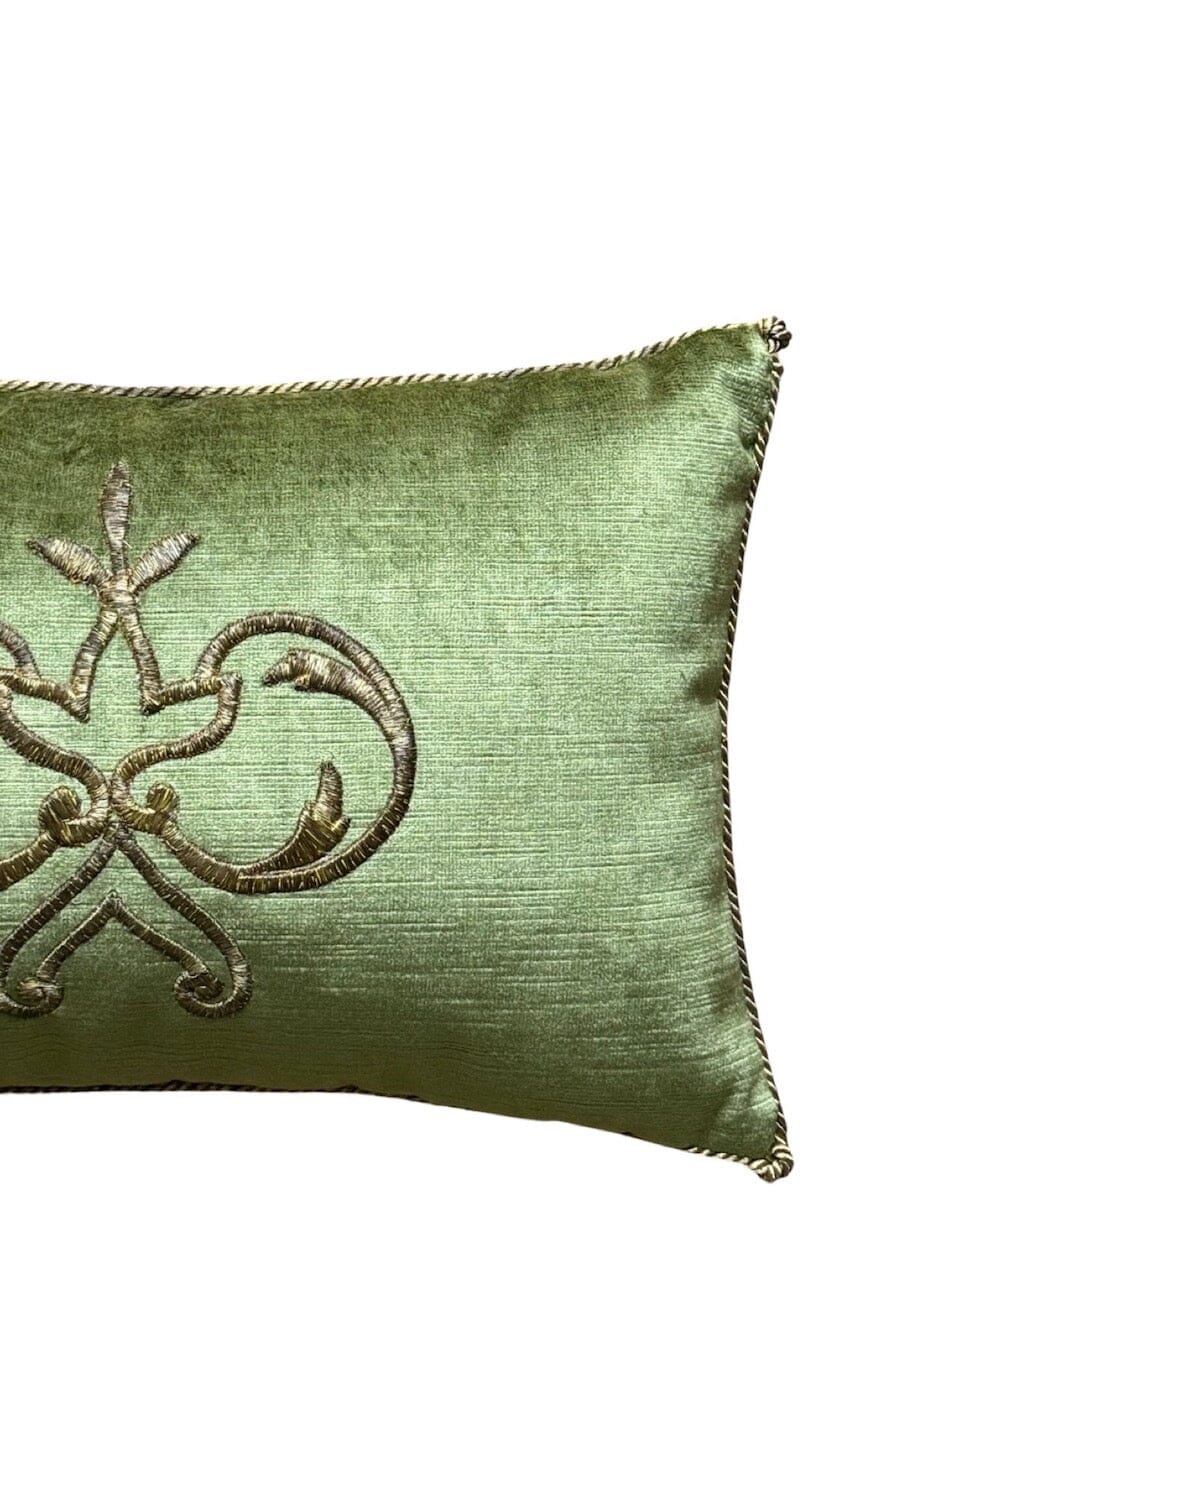 Antique Ottoman Empire Raised Gold Metallic Embroidery (#E021424 | 10 x 15") New Pillows B. Viz Design 